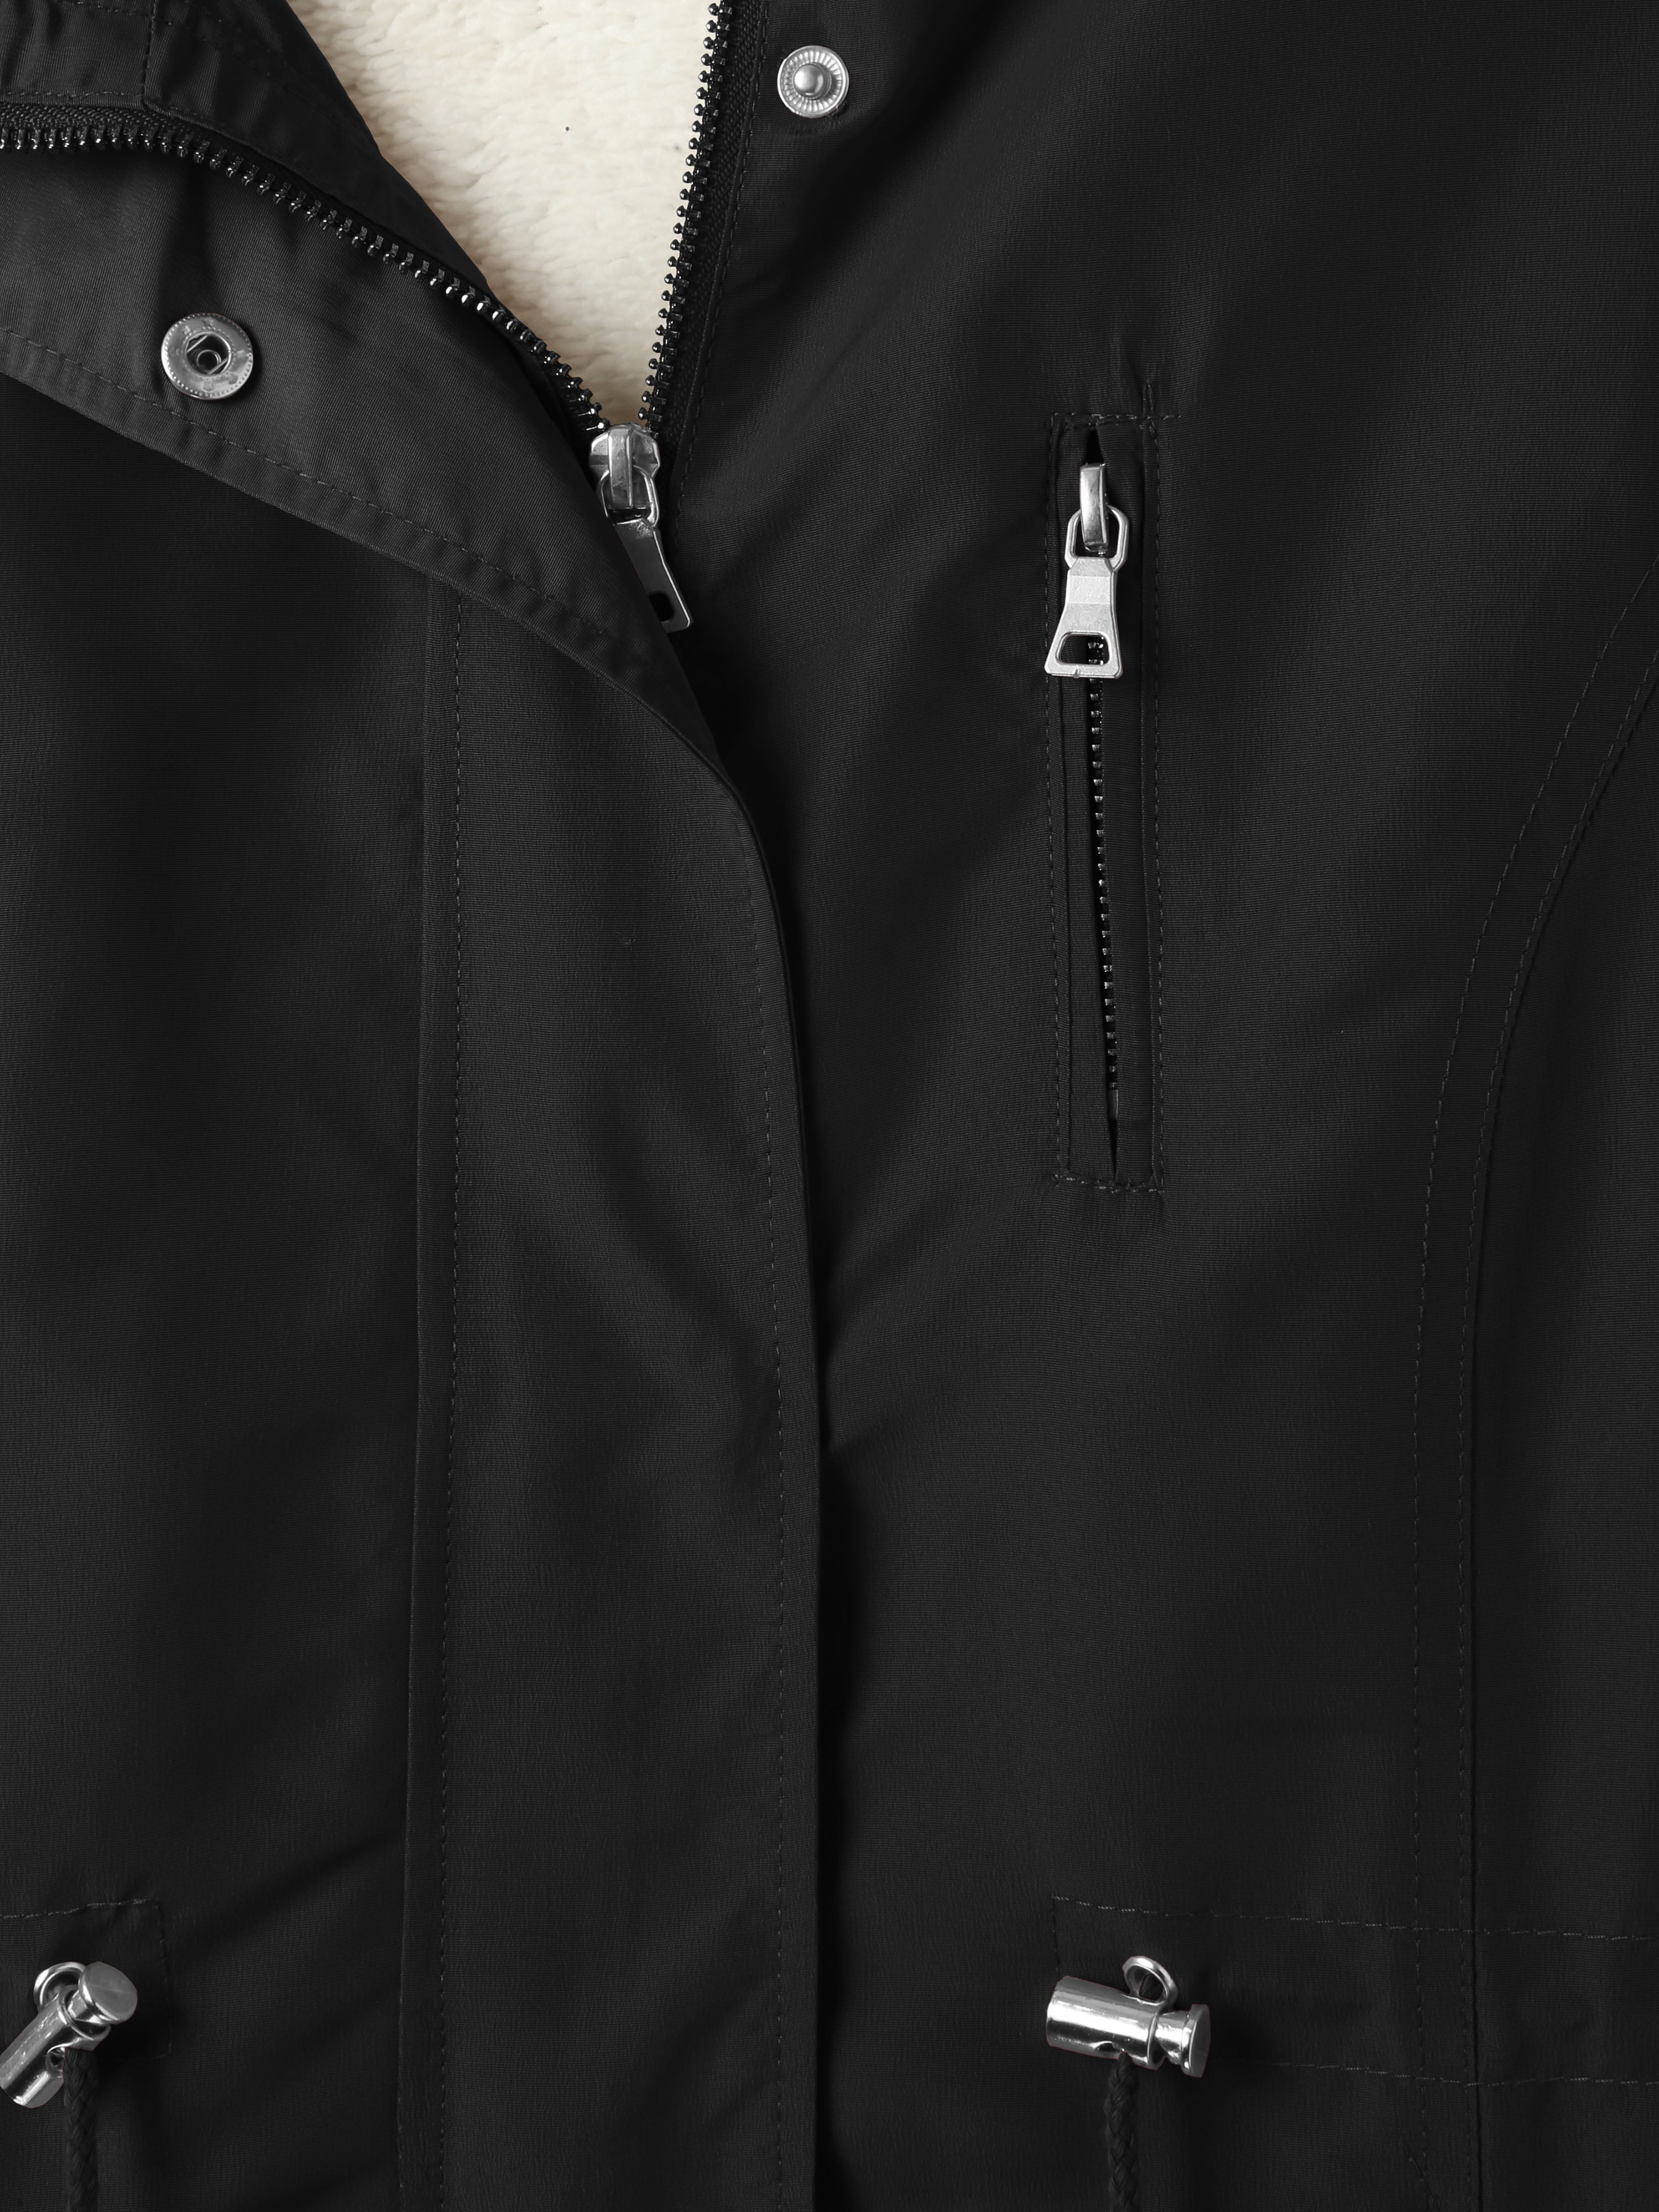 Buy Hat and Beyond Half Zip Anorak Windbreaker Jacket with Hoodie Sports  Activewear Outdoor, 1gm01_burgundy, XX-Large at